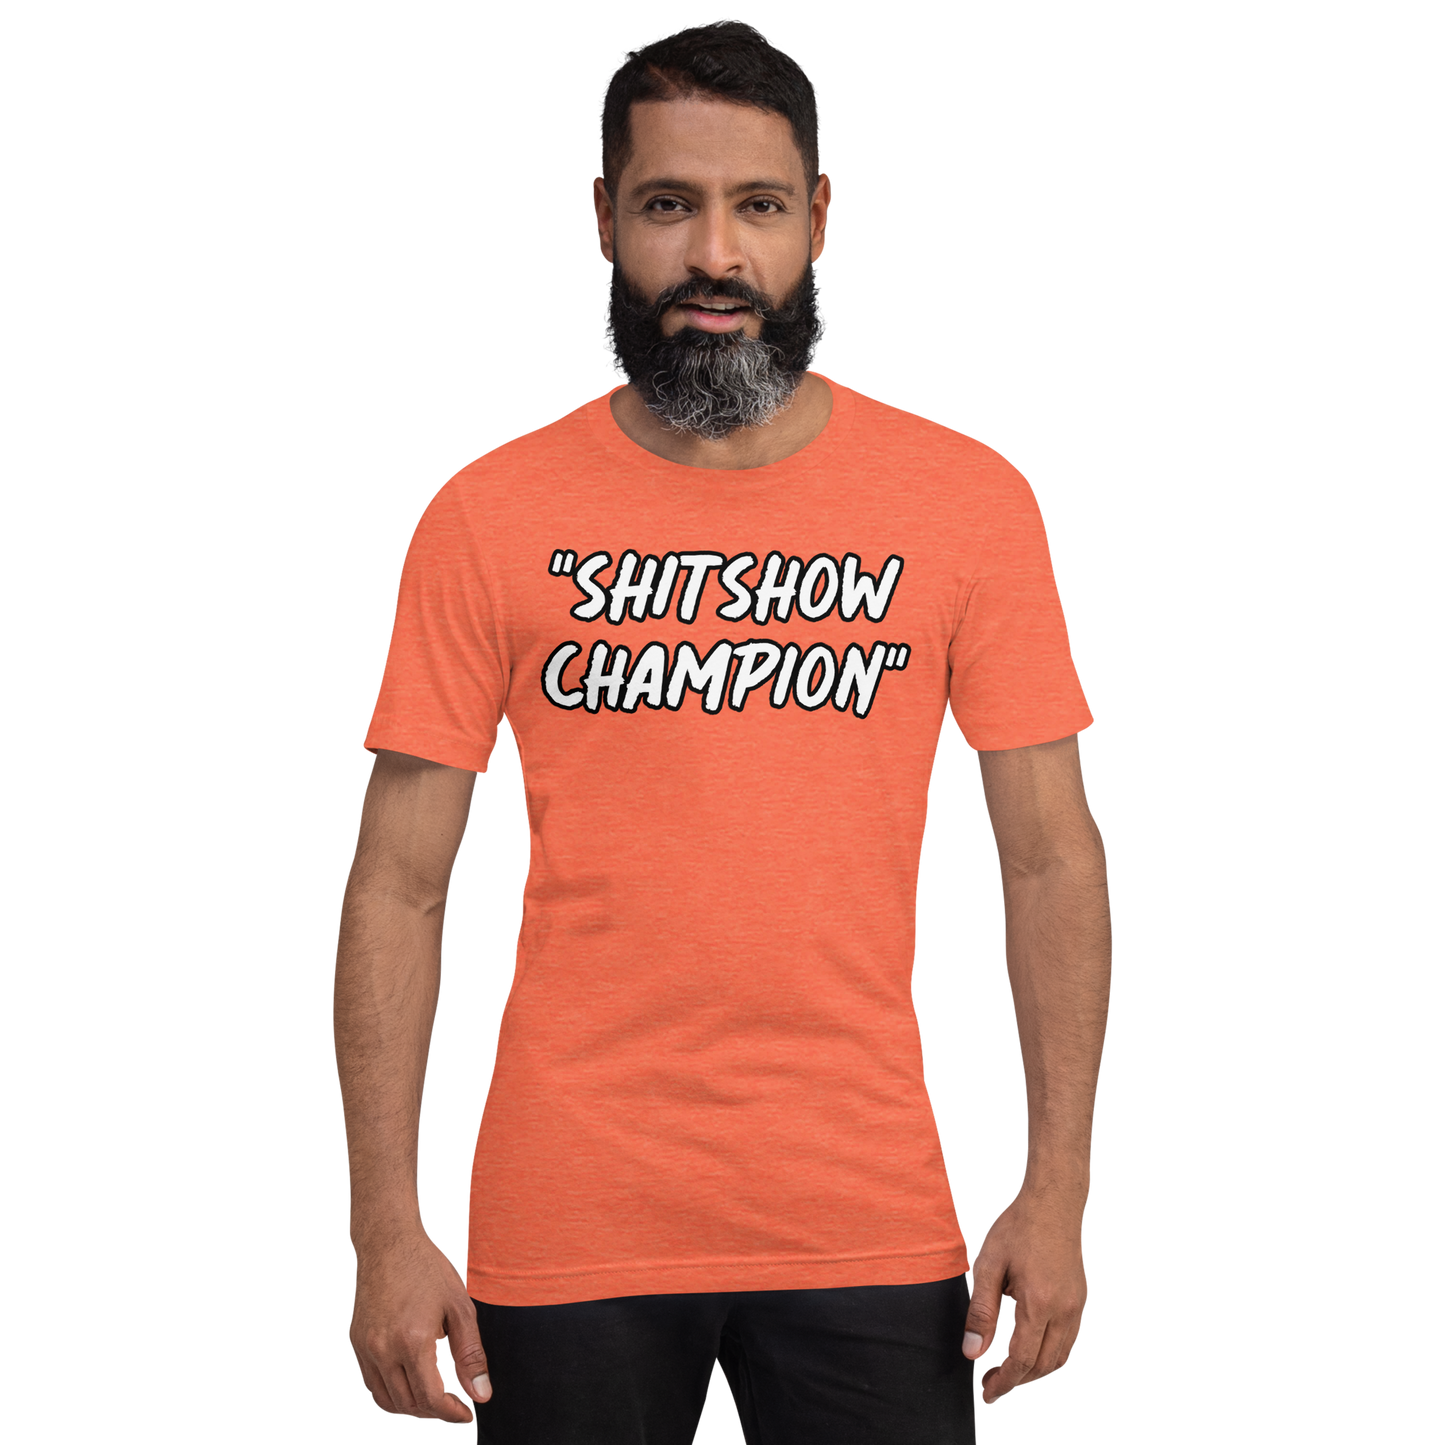 Champion Show T-shirt